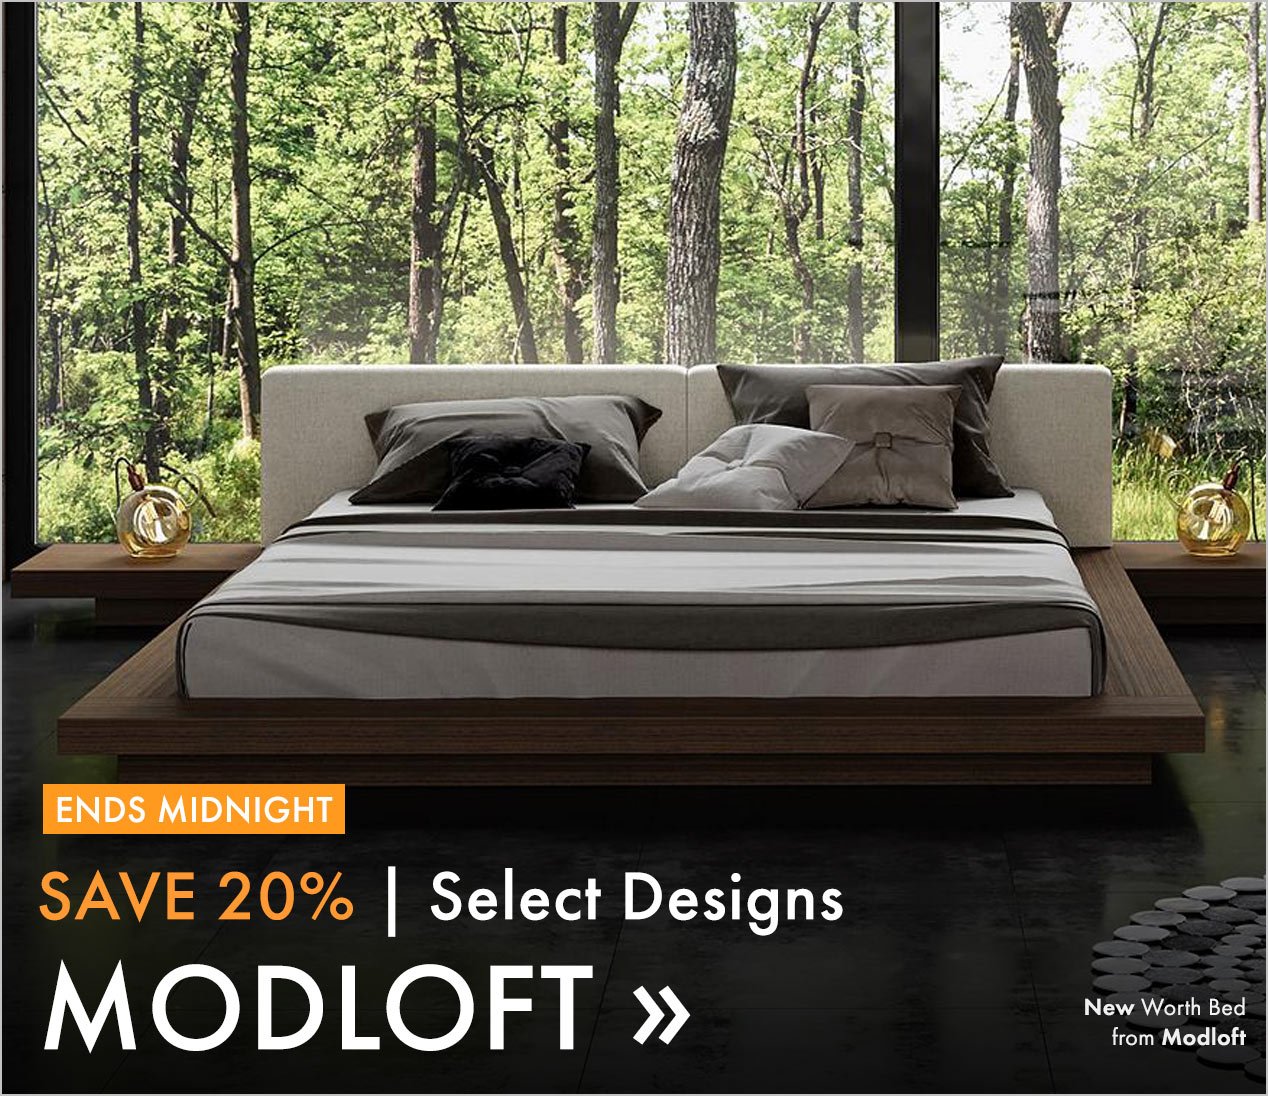 Ends Midnight. Save 20% | Select Designs. Modloft.